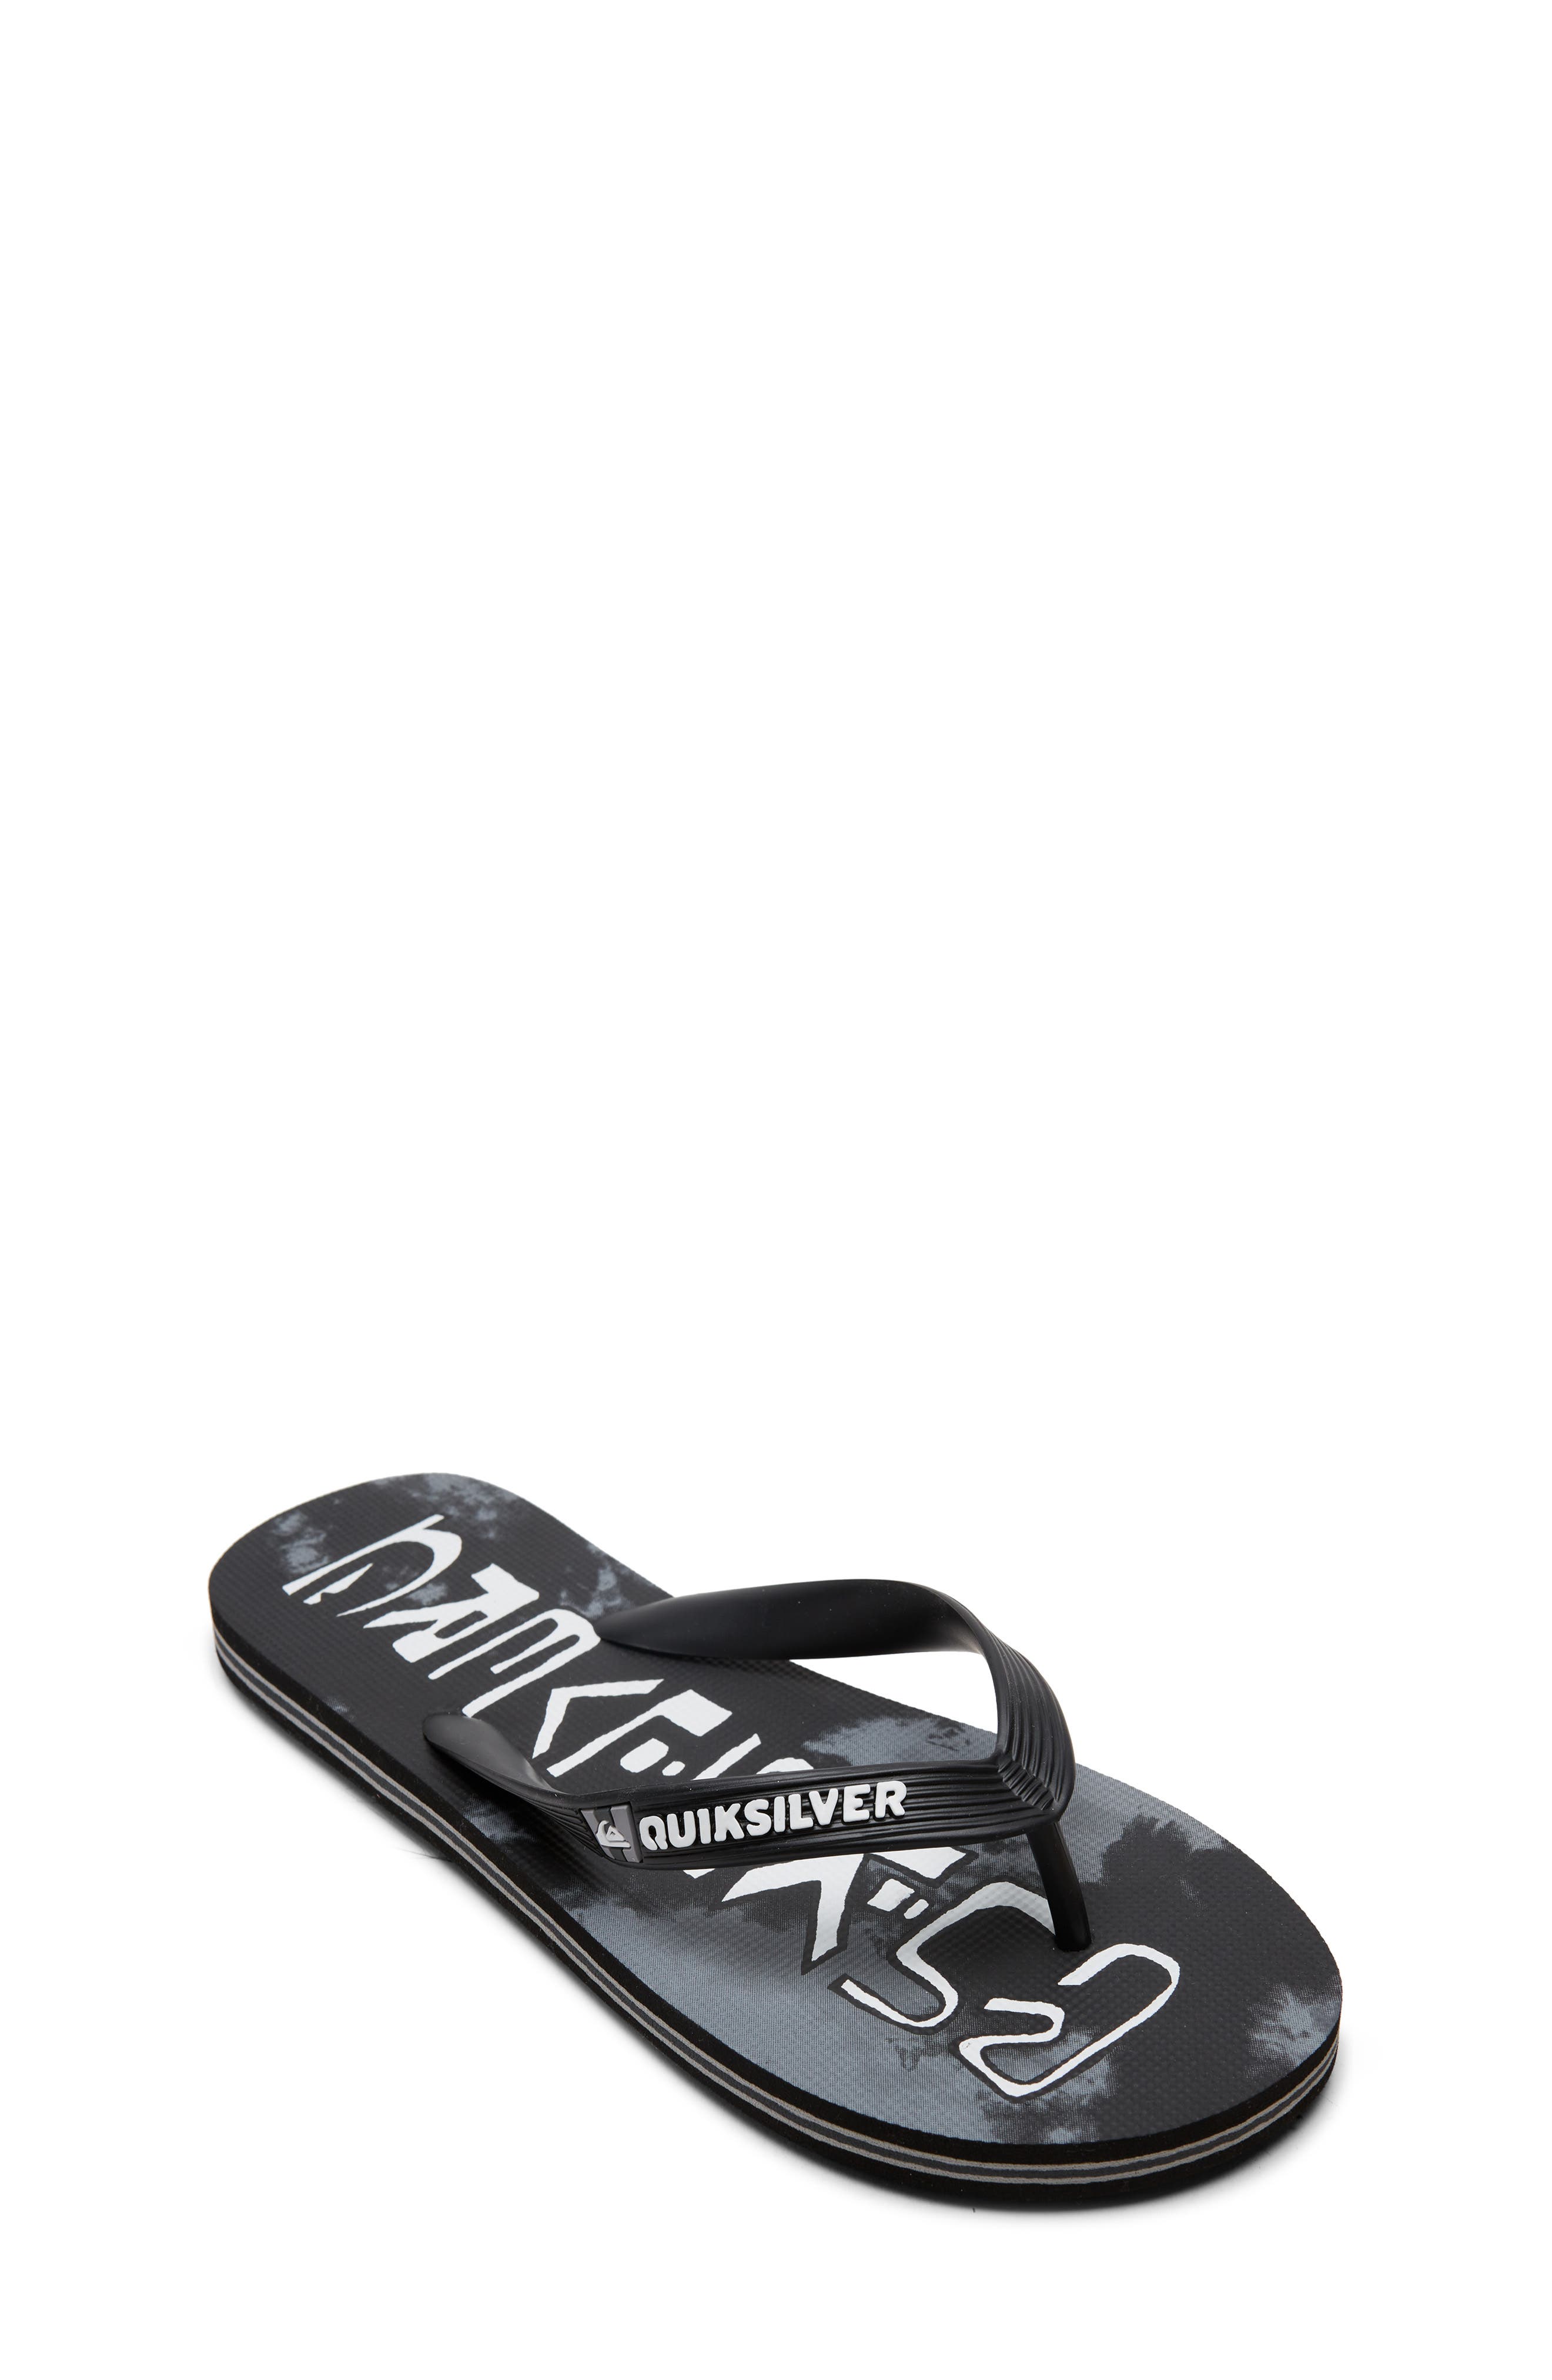 Womens Sandals Bolt Saltwater Stretch Reef Beach Aqua Shoes Black US Size 5